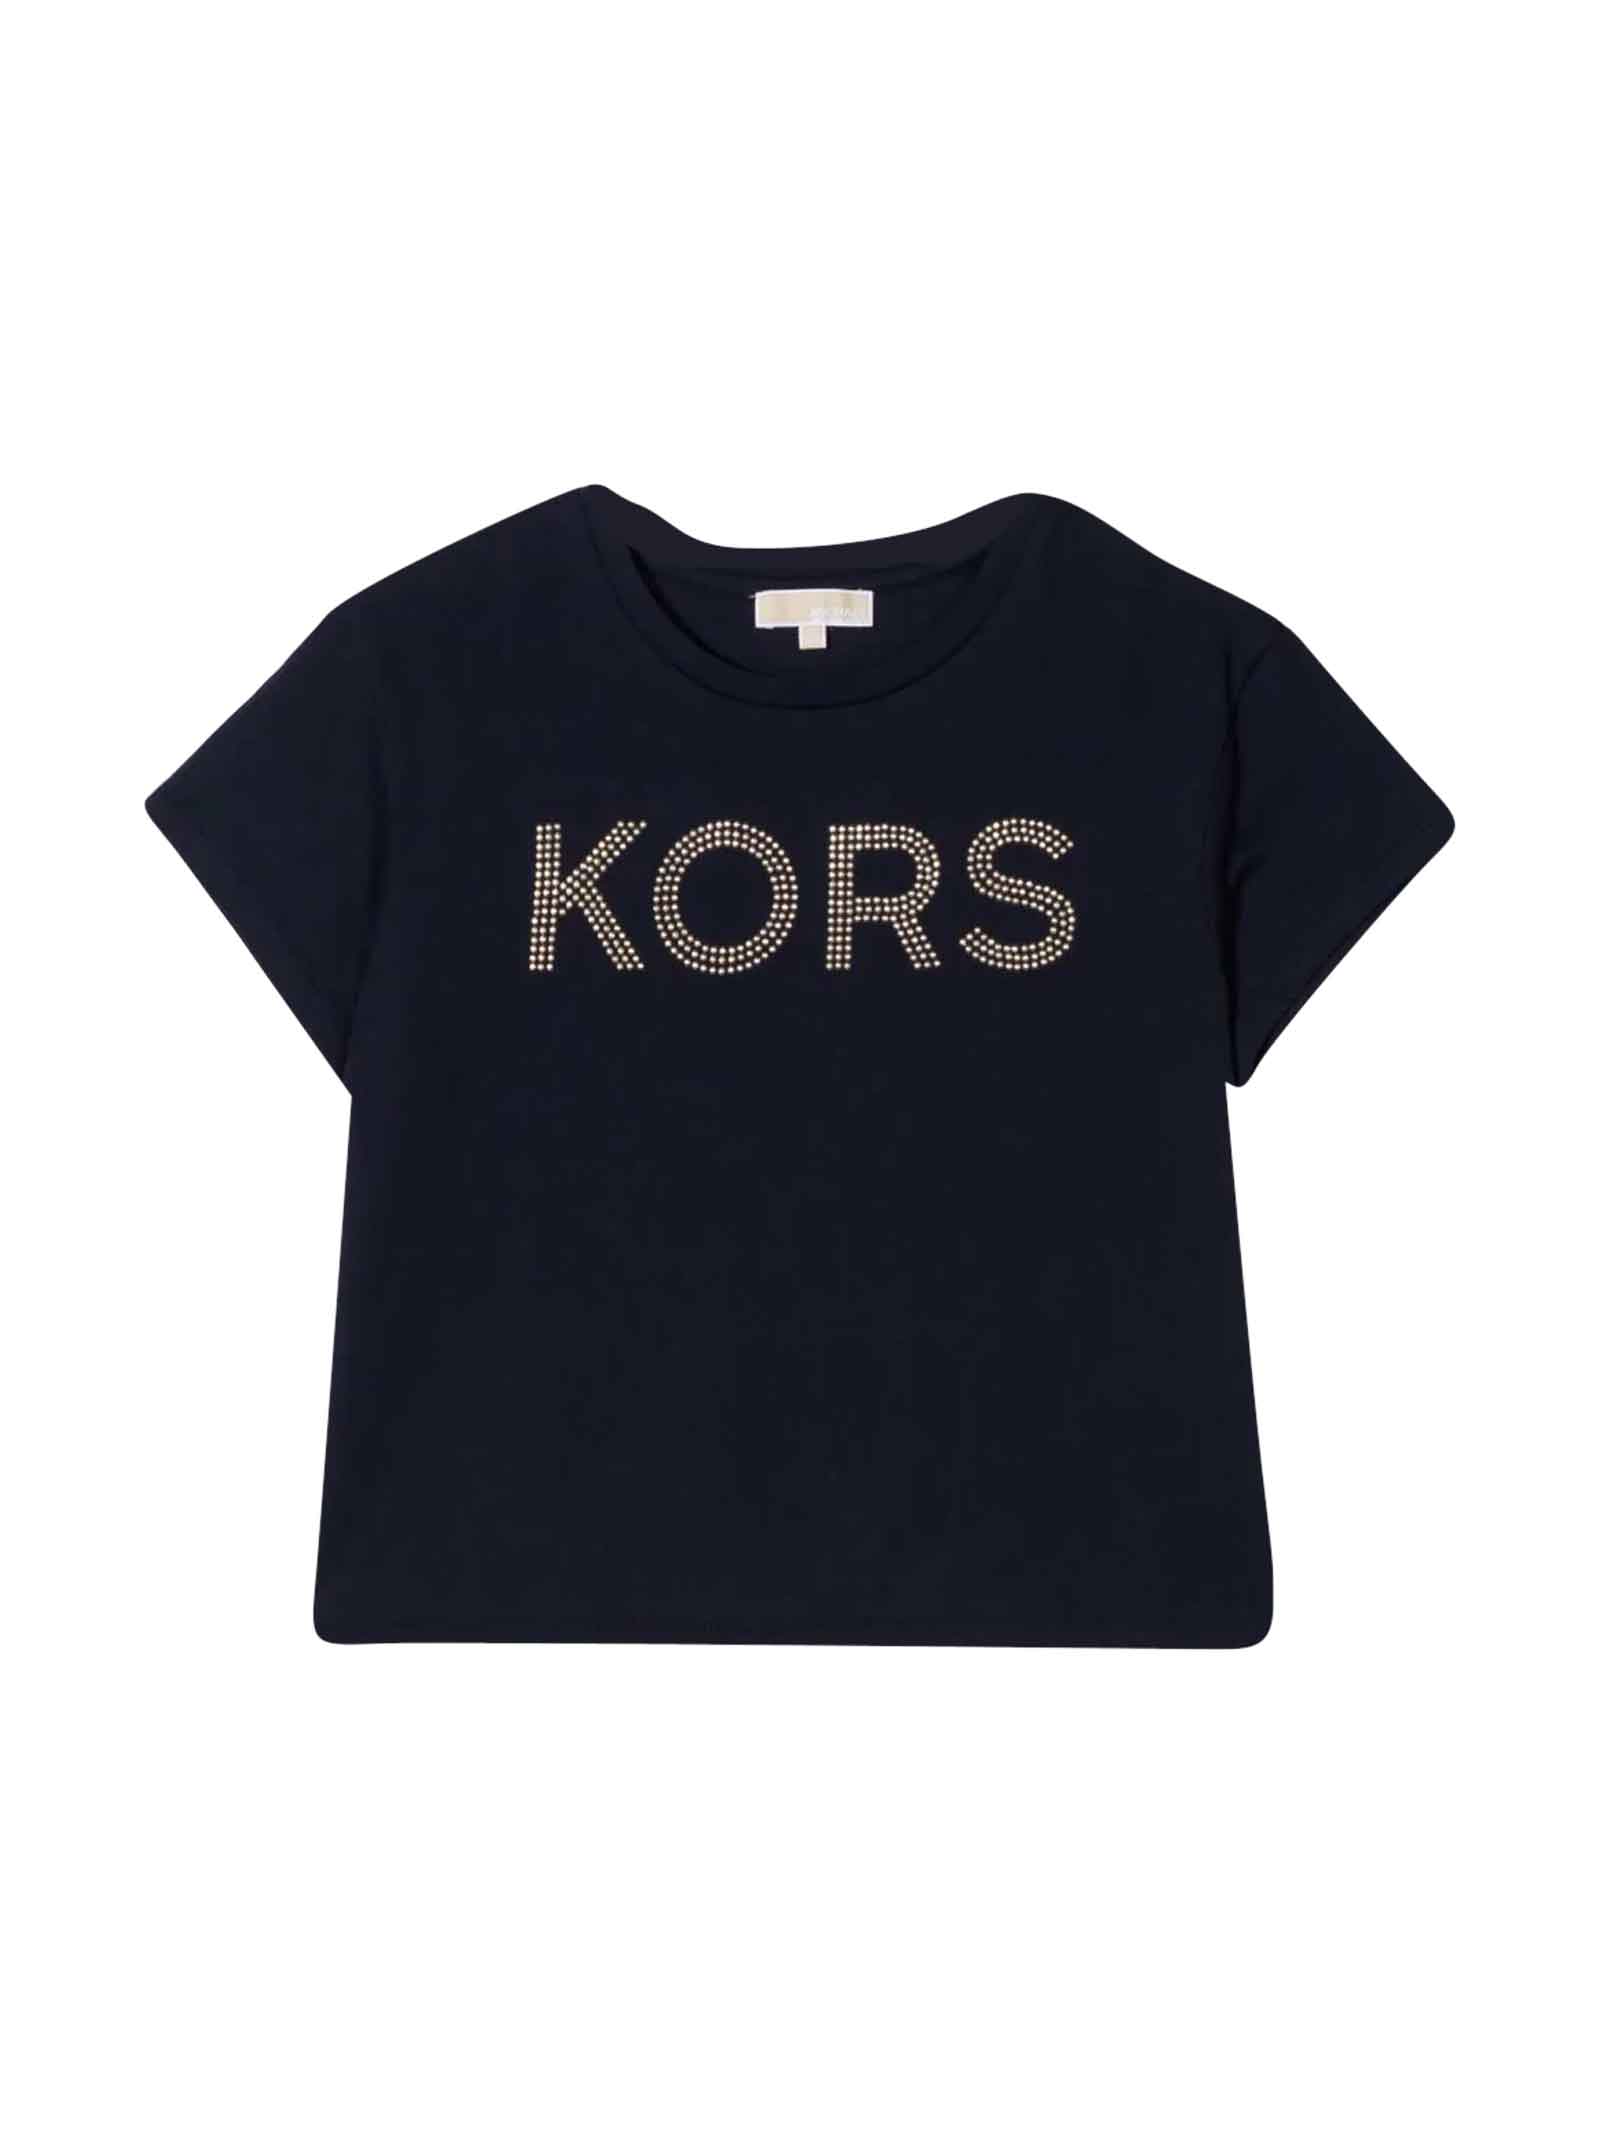 Michael Kors Blue T-shirt Girl